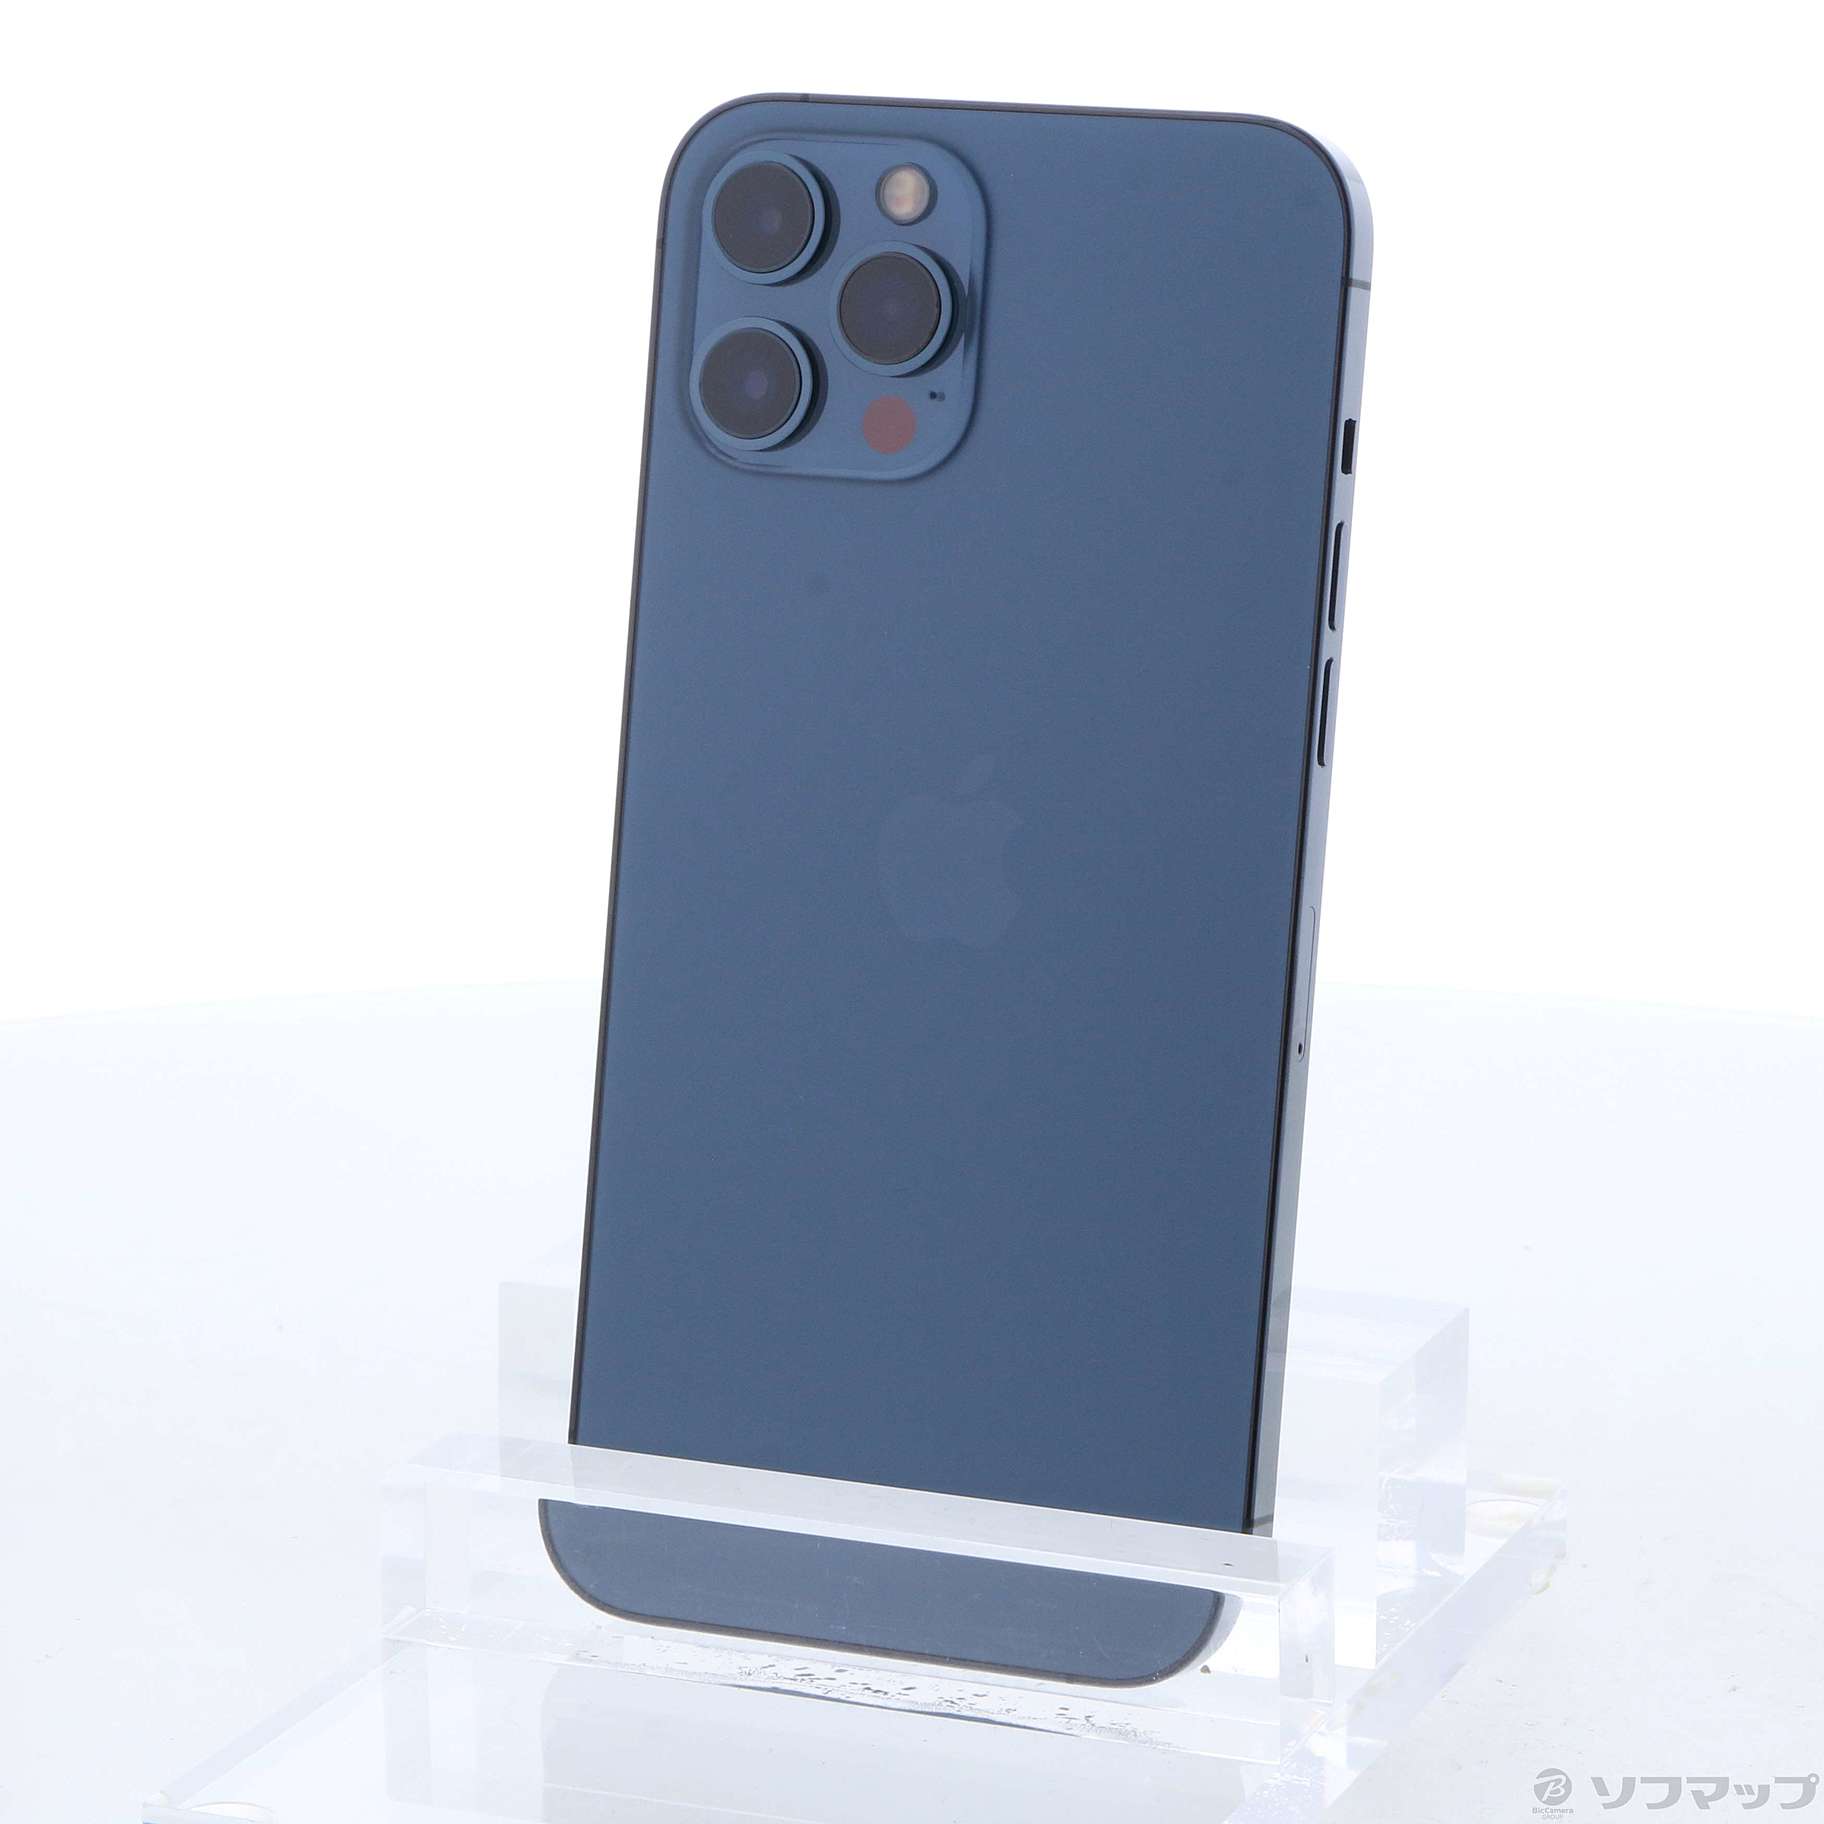 iPhone 12 Pro Max 256GB SIMフリー パシフィックブルー